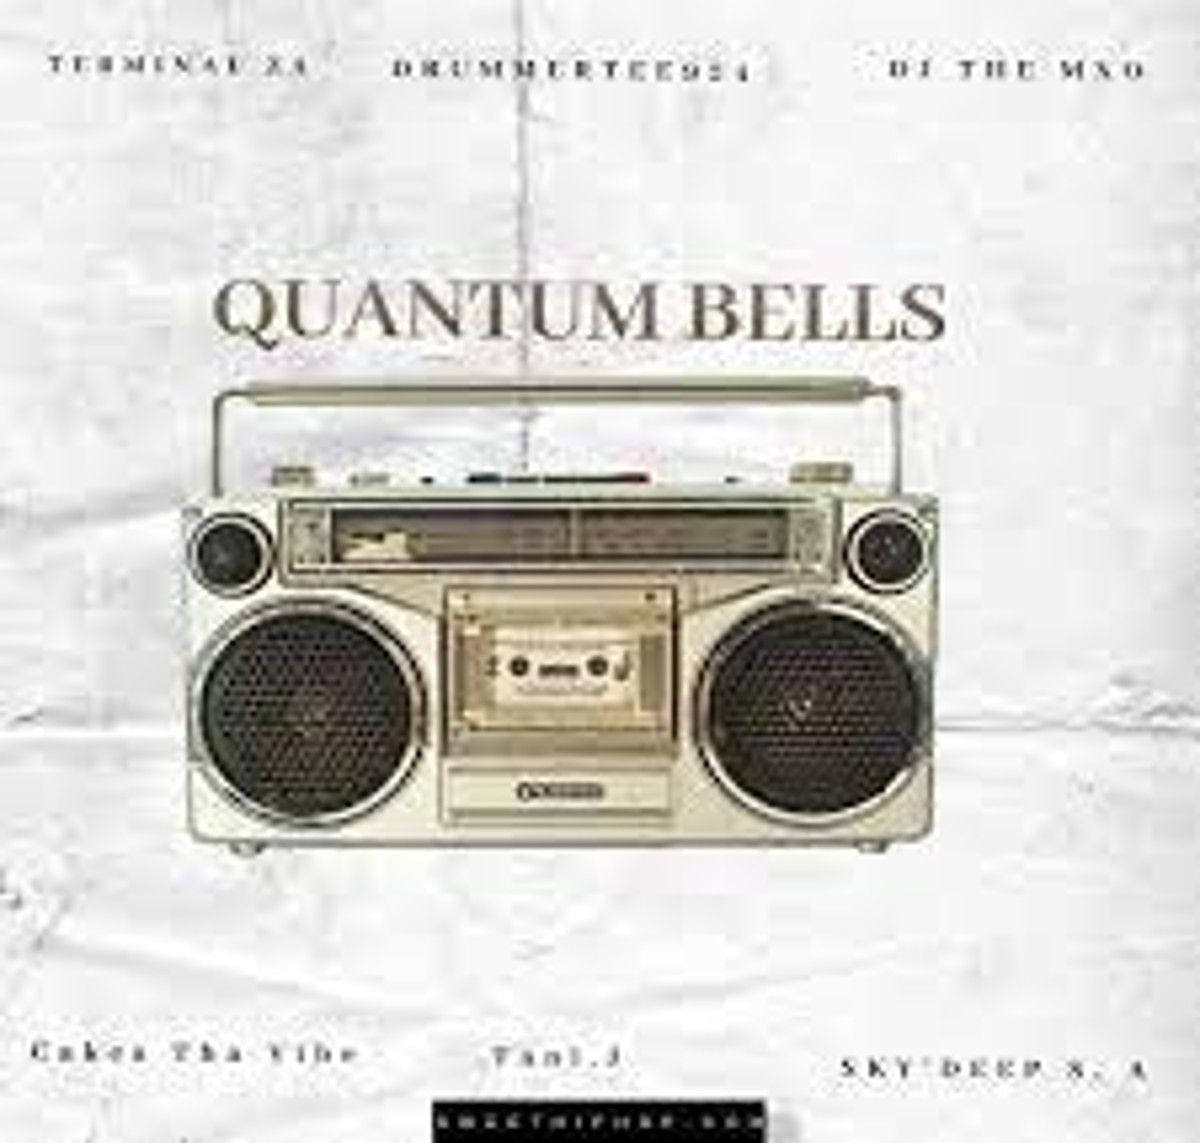 Terminal ZA, DrummeRTee924 & DJ THE MXO – Quantum Bells ft. cakes tha vibe, Sky Deep SA & Tani.J Mp3 Download Fakaza